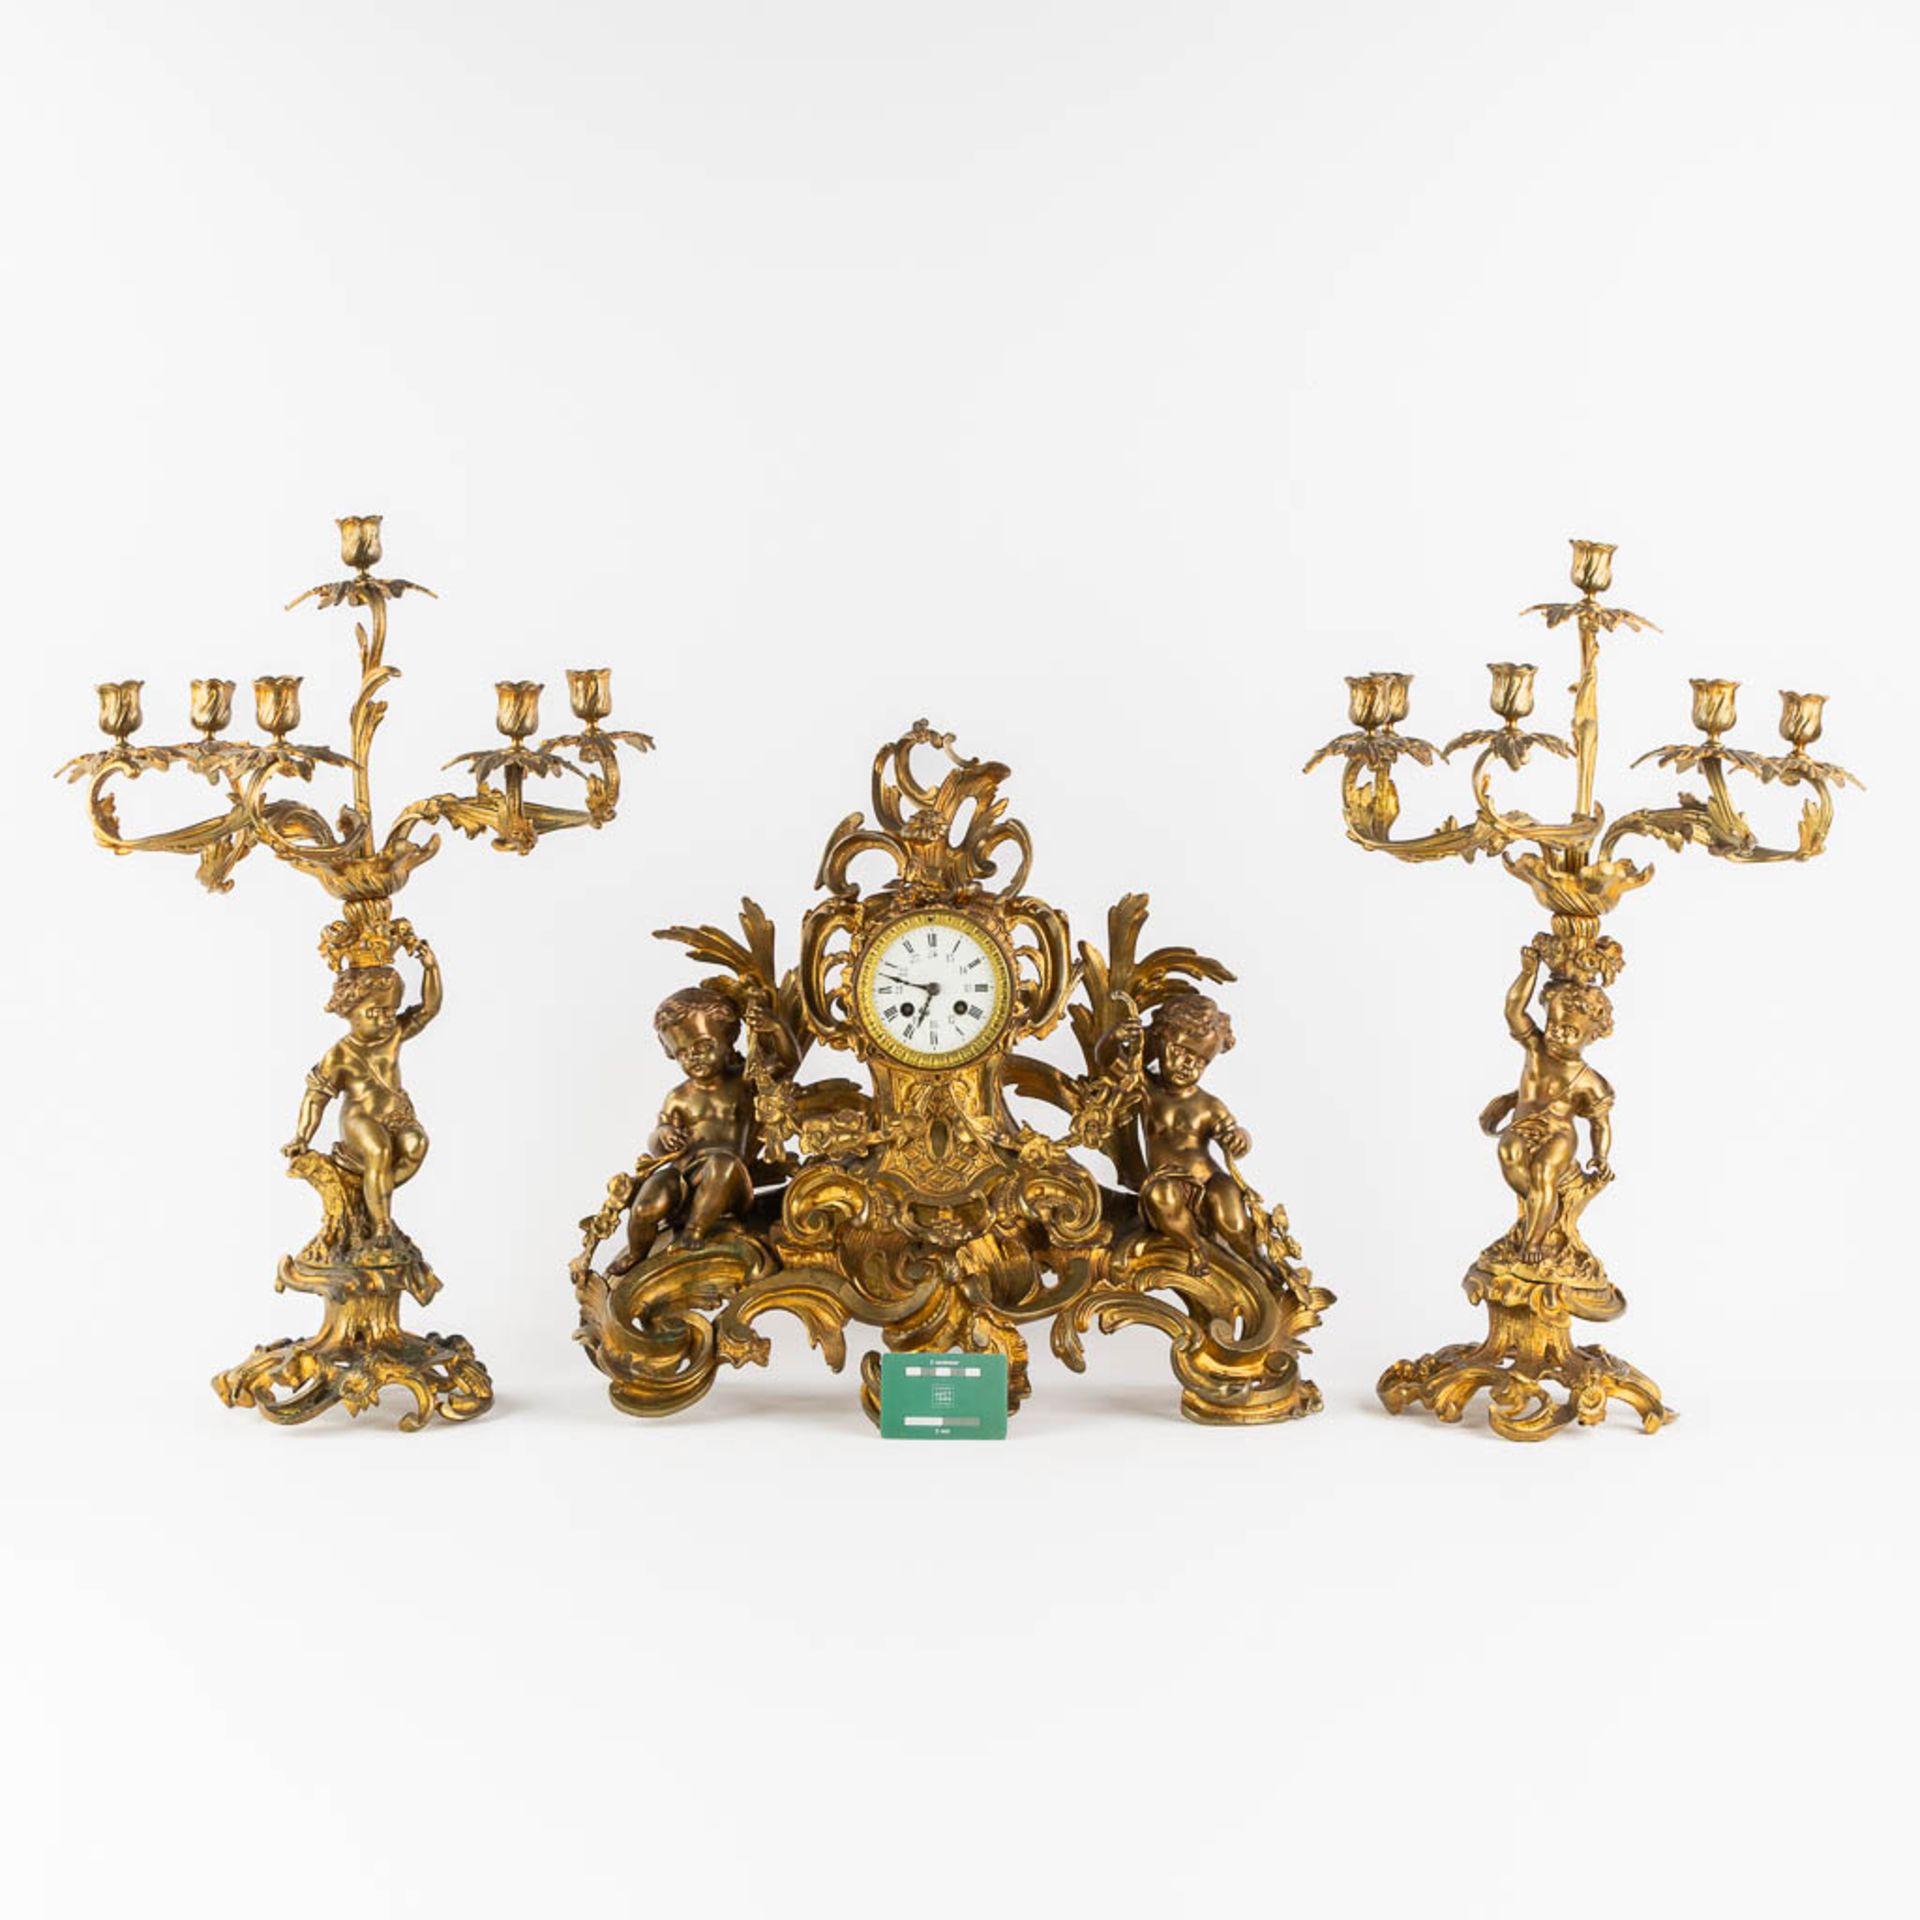 A three-piece mantle garniture clock and candelabra, gilt bronze. 19th C. (L:21 x W:55 x H:48 cm) - Image 2 of 16